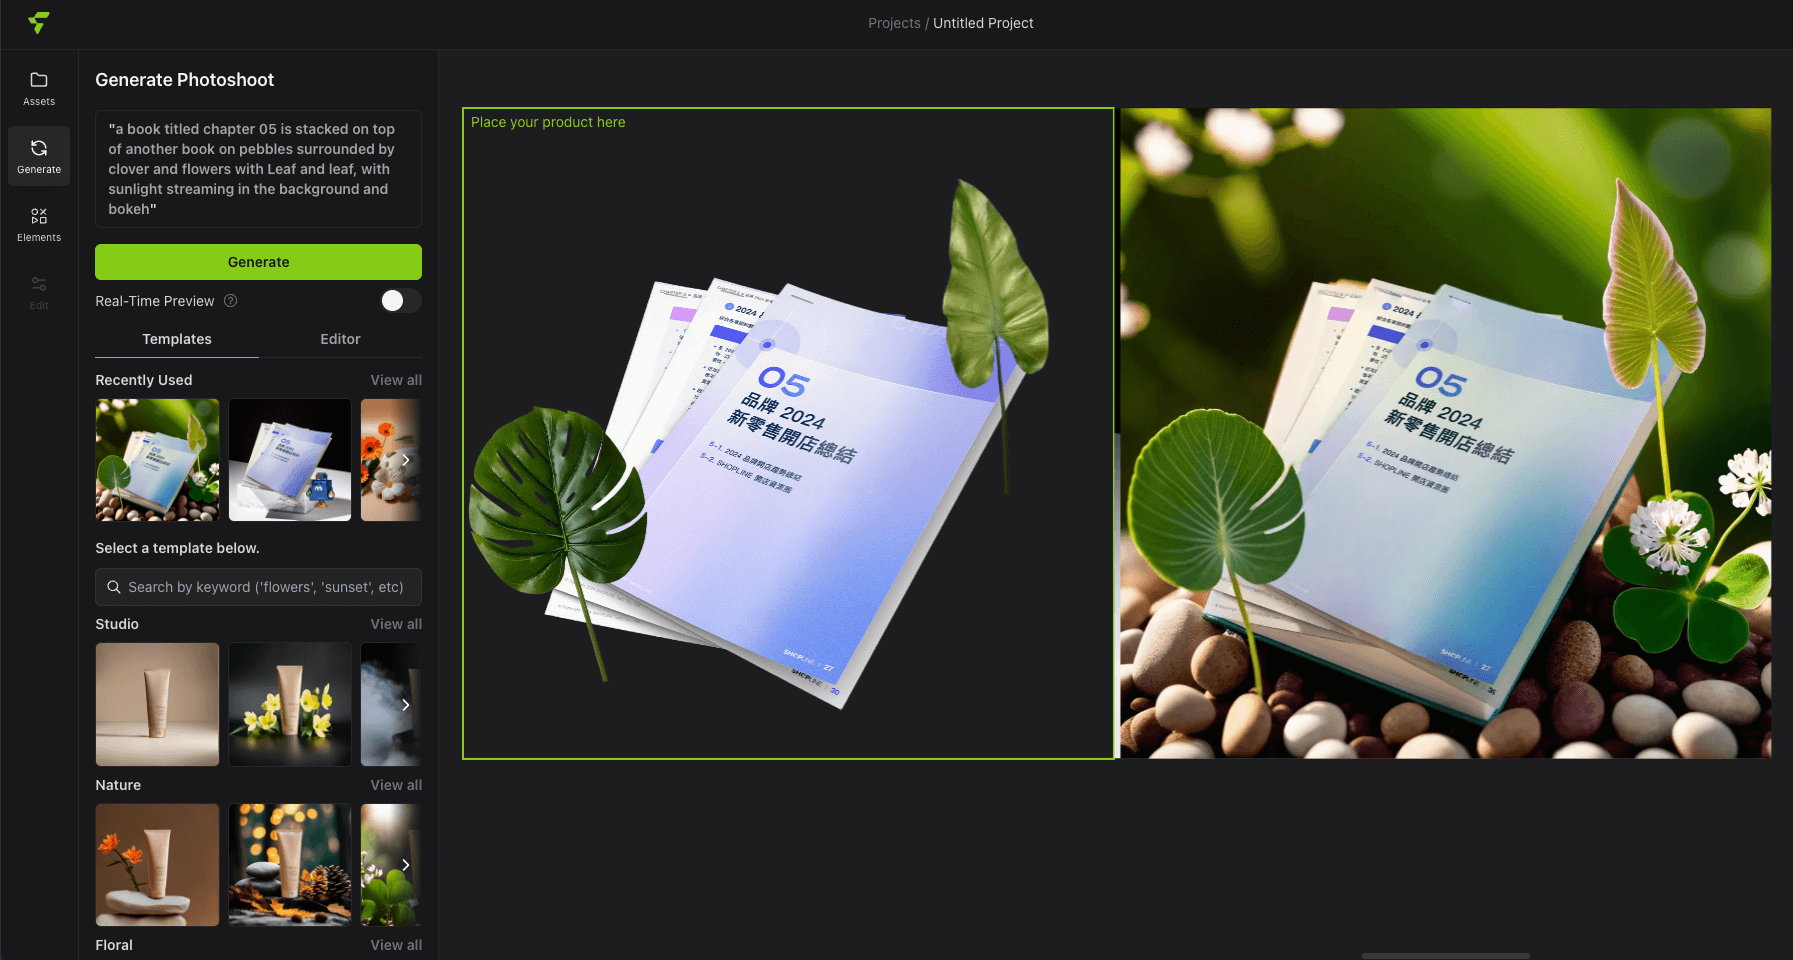 Flair 視覺化的編輯介面，能讓使用者甚至不用輸入 Prompt 也能快速生成圖片